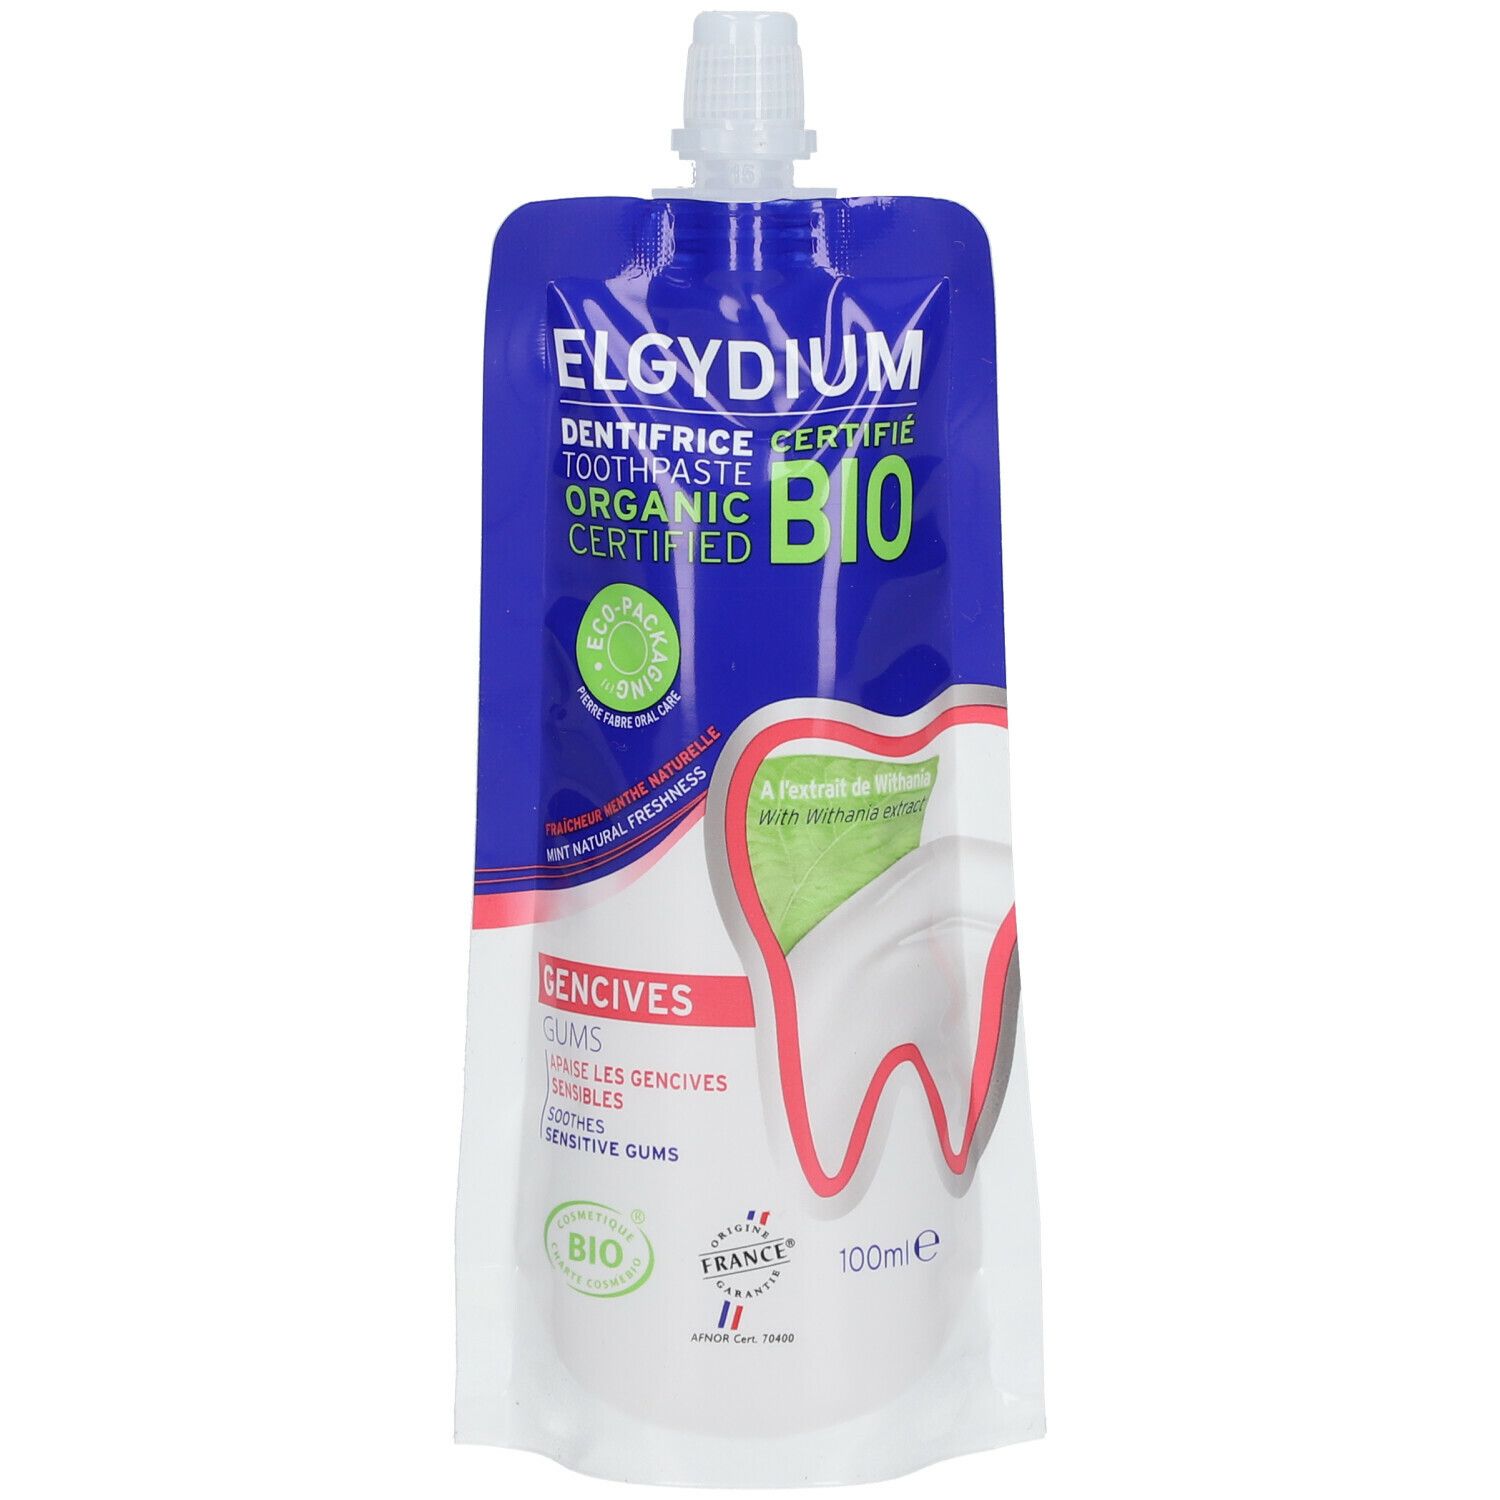 Elgydium Gencives Dentifrice éco-conçu certifié BIO